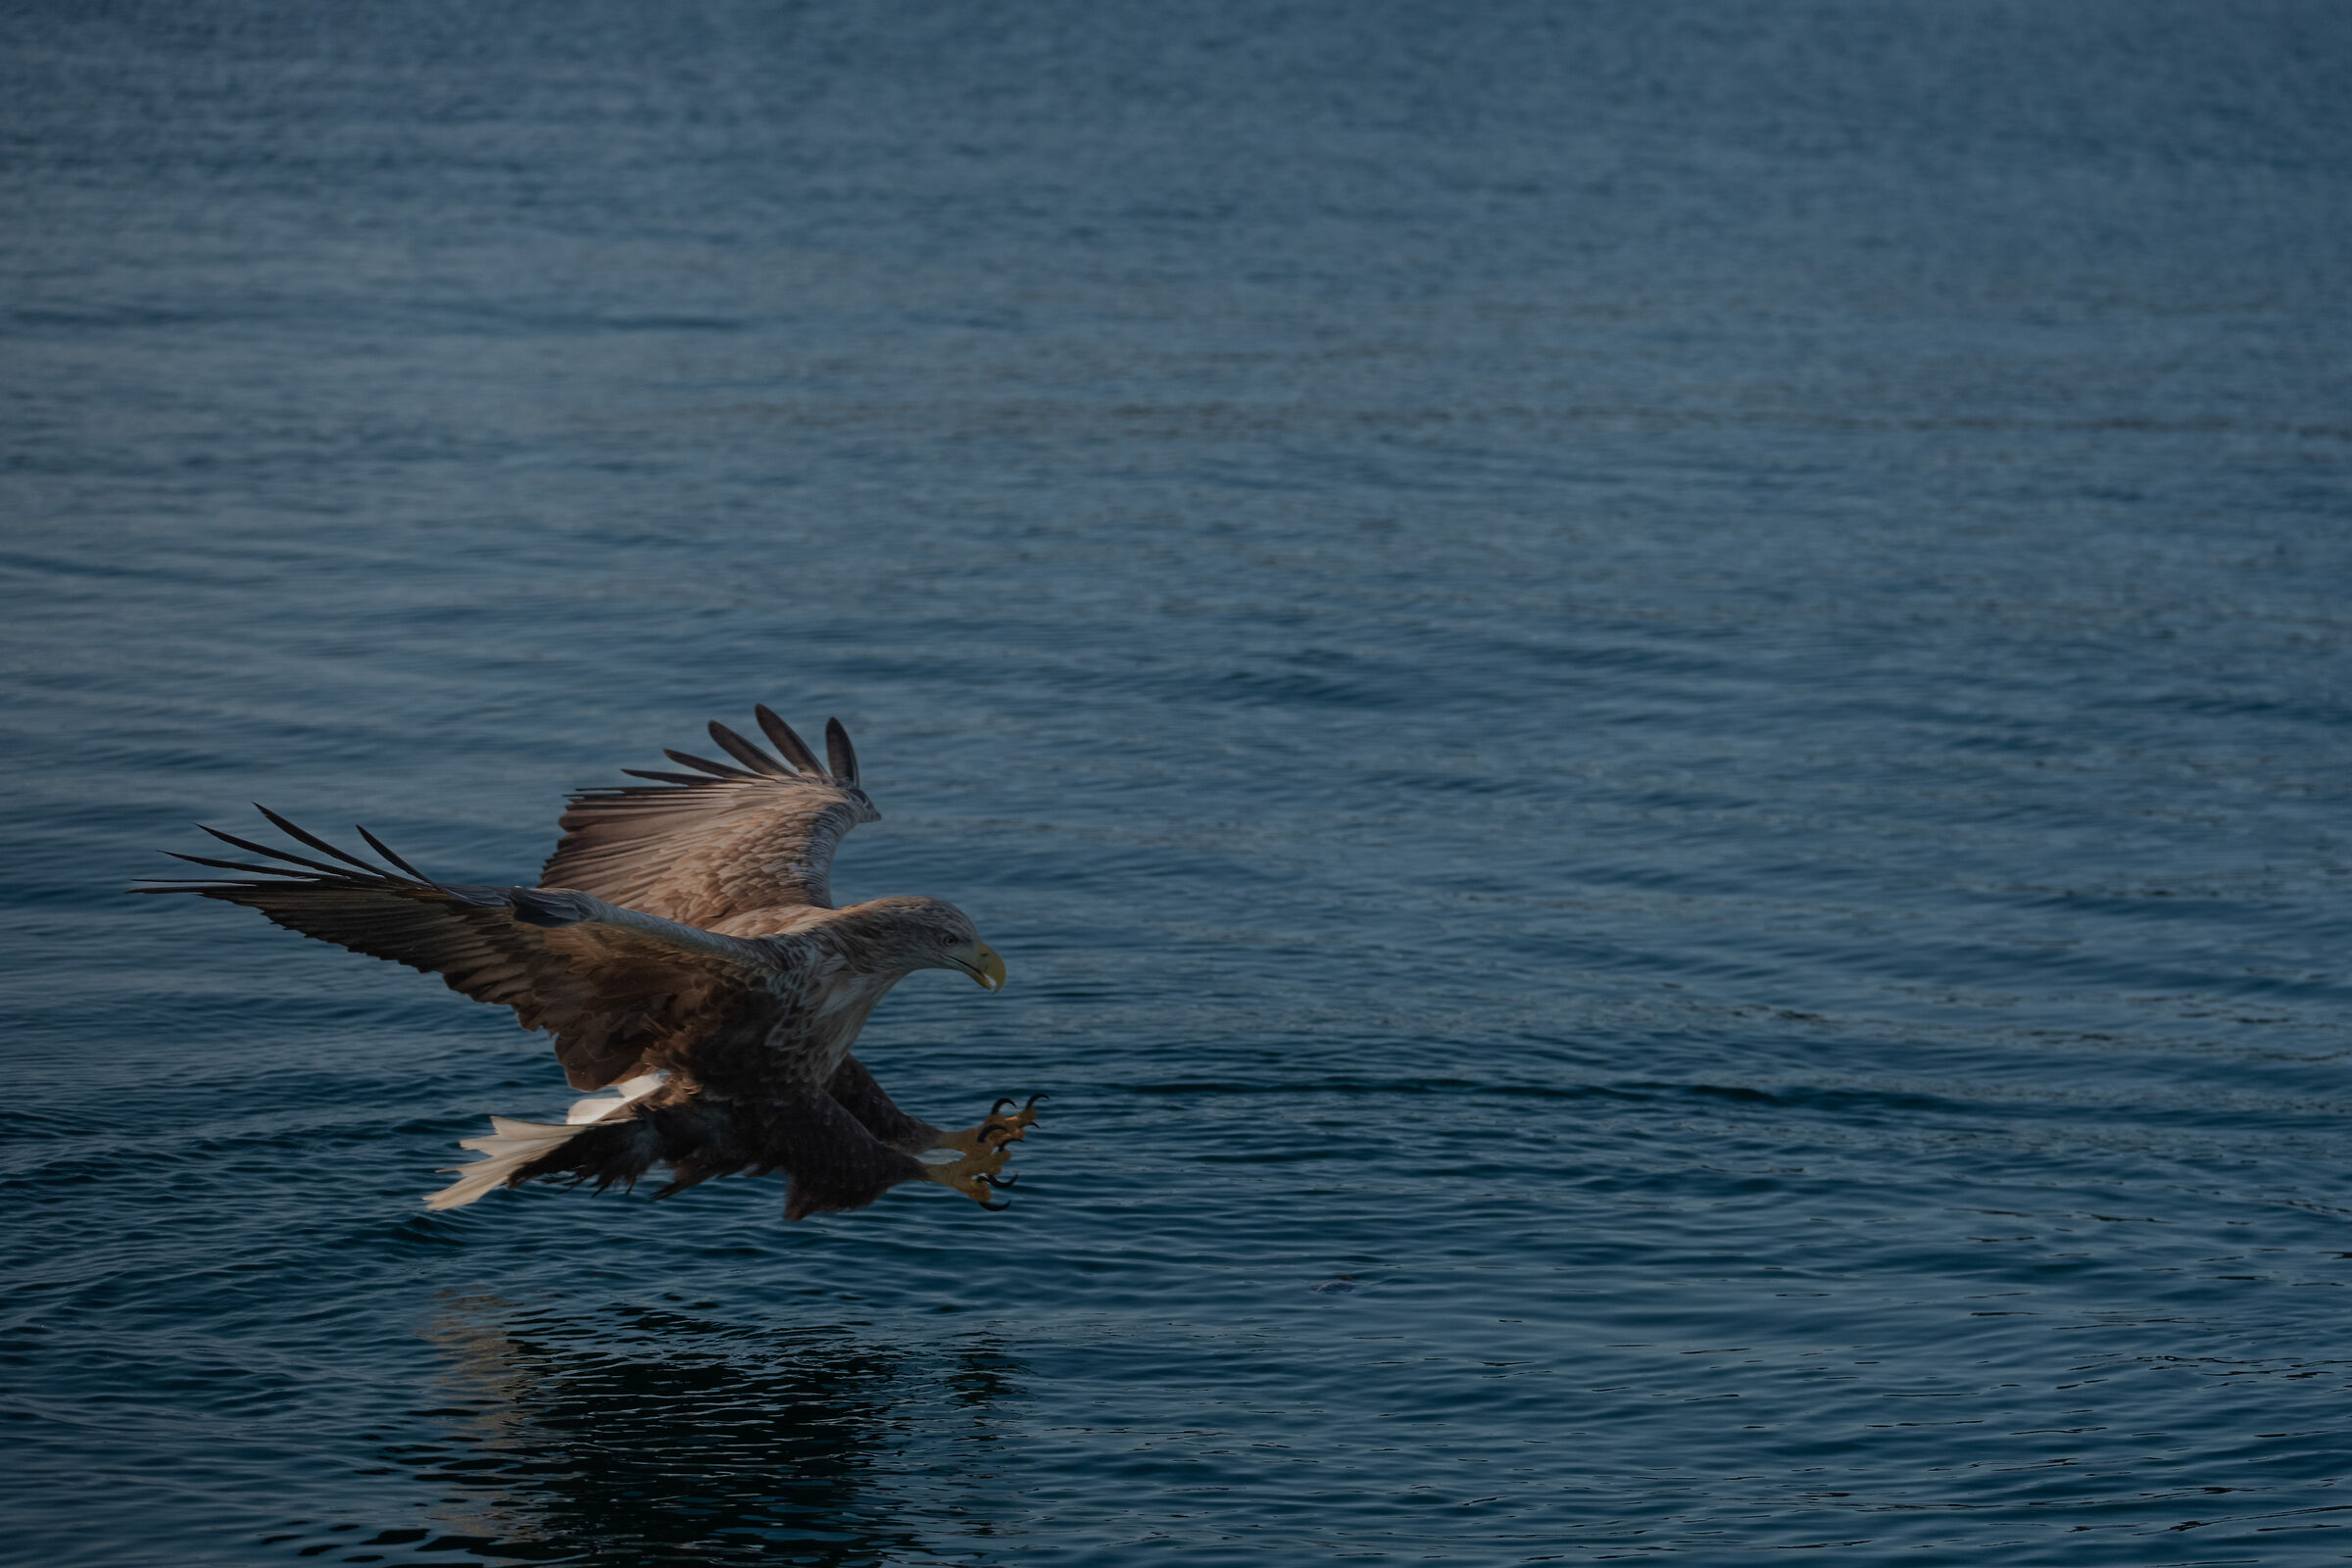 sea eagle on the hunt ...